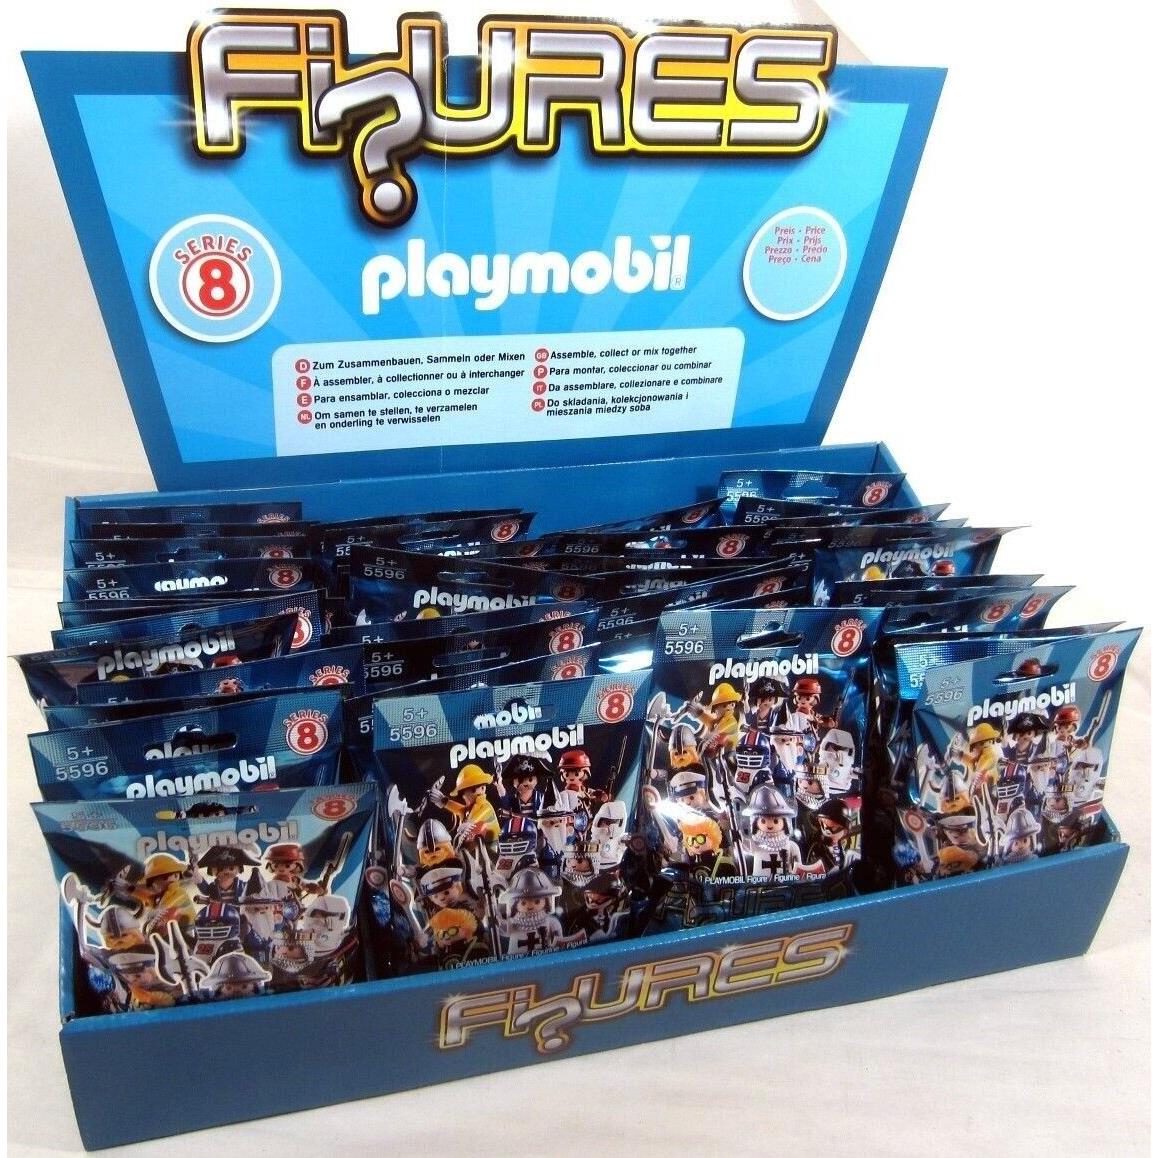 Playmobil 5596 Blue Boys Series 8 Mini Figure Case of 48 Mystery Blind Bags